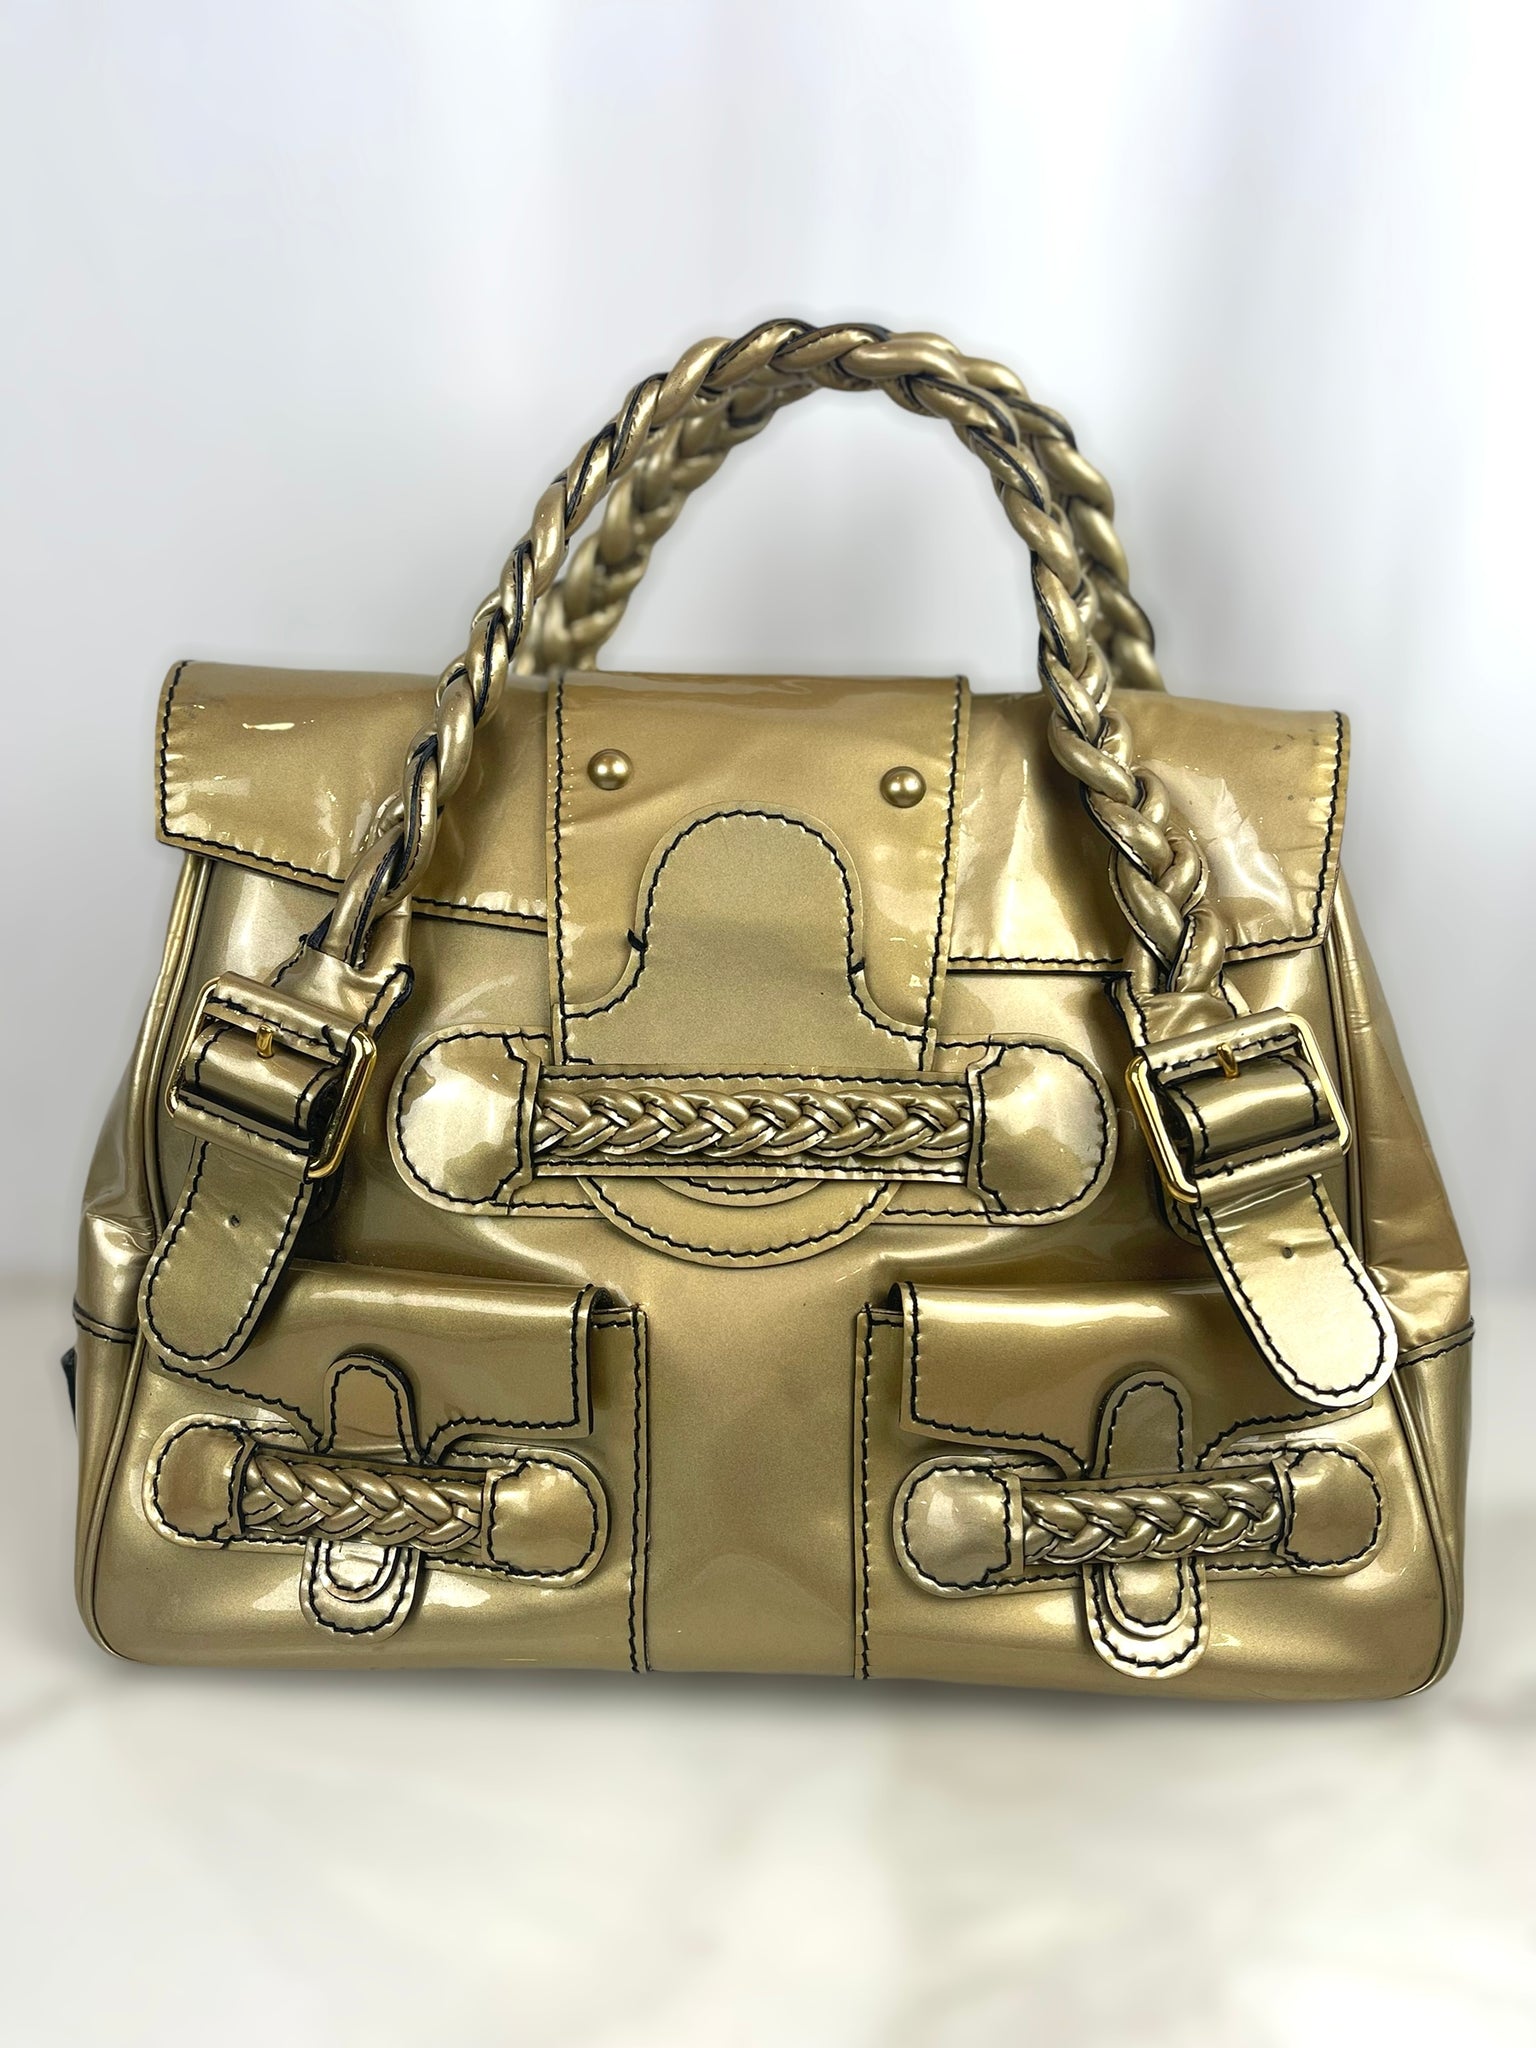 Patent leather satchel